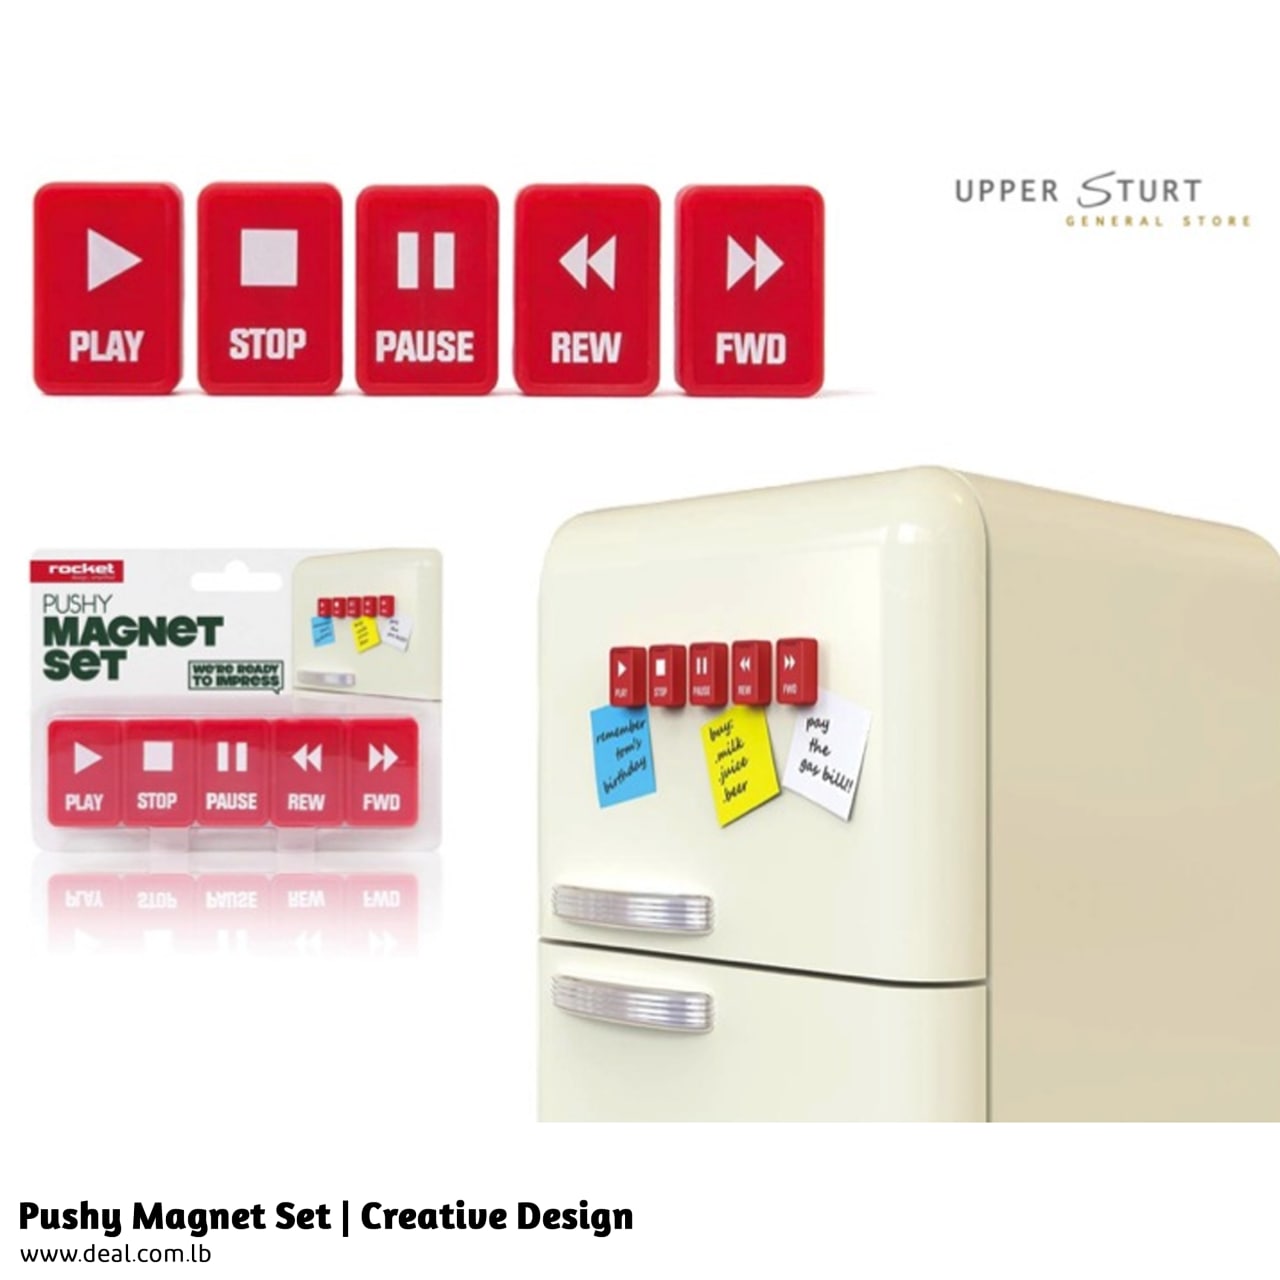 Pushy Magnet Set | Creative Design